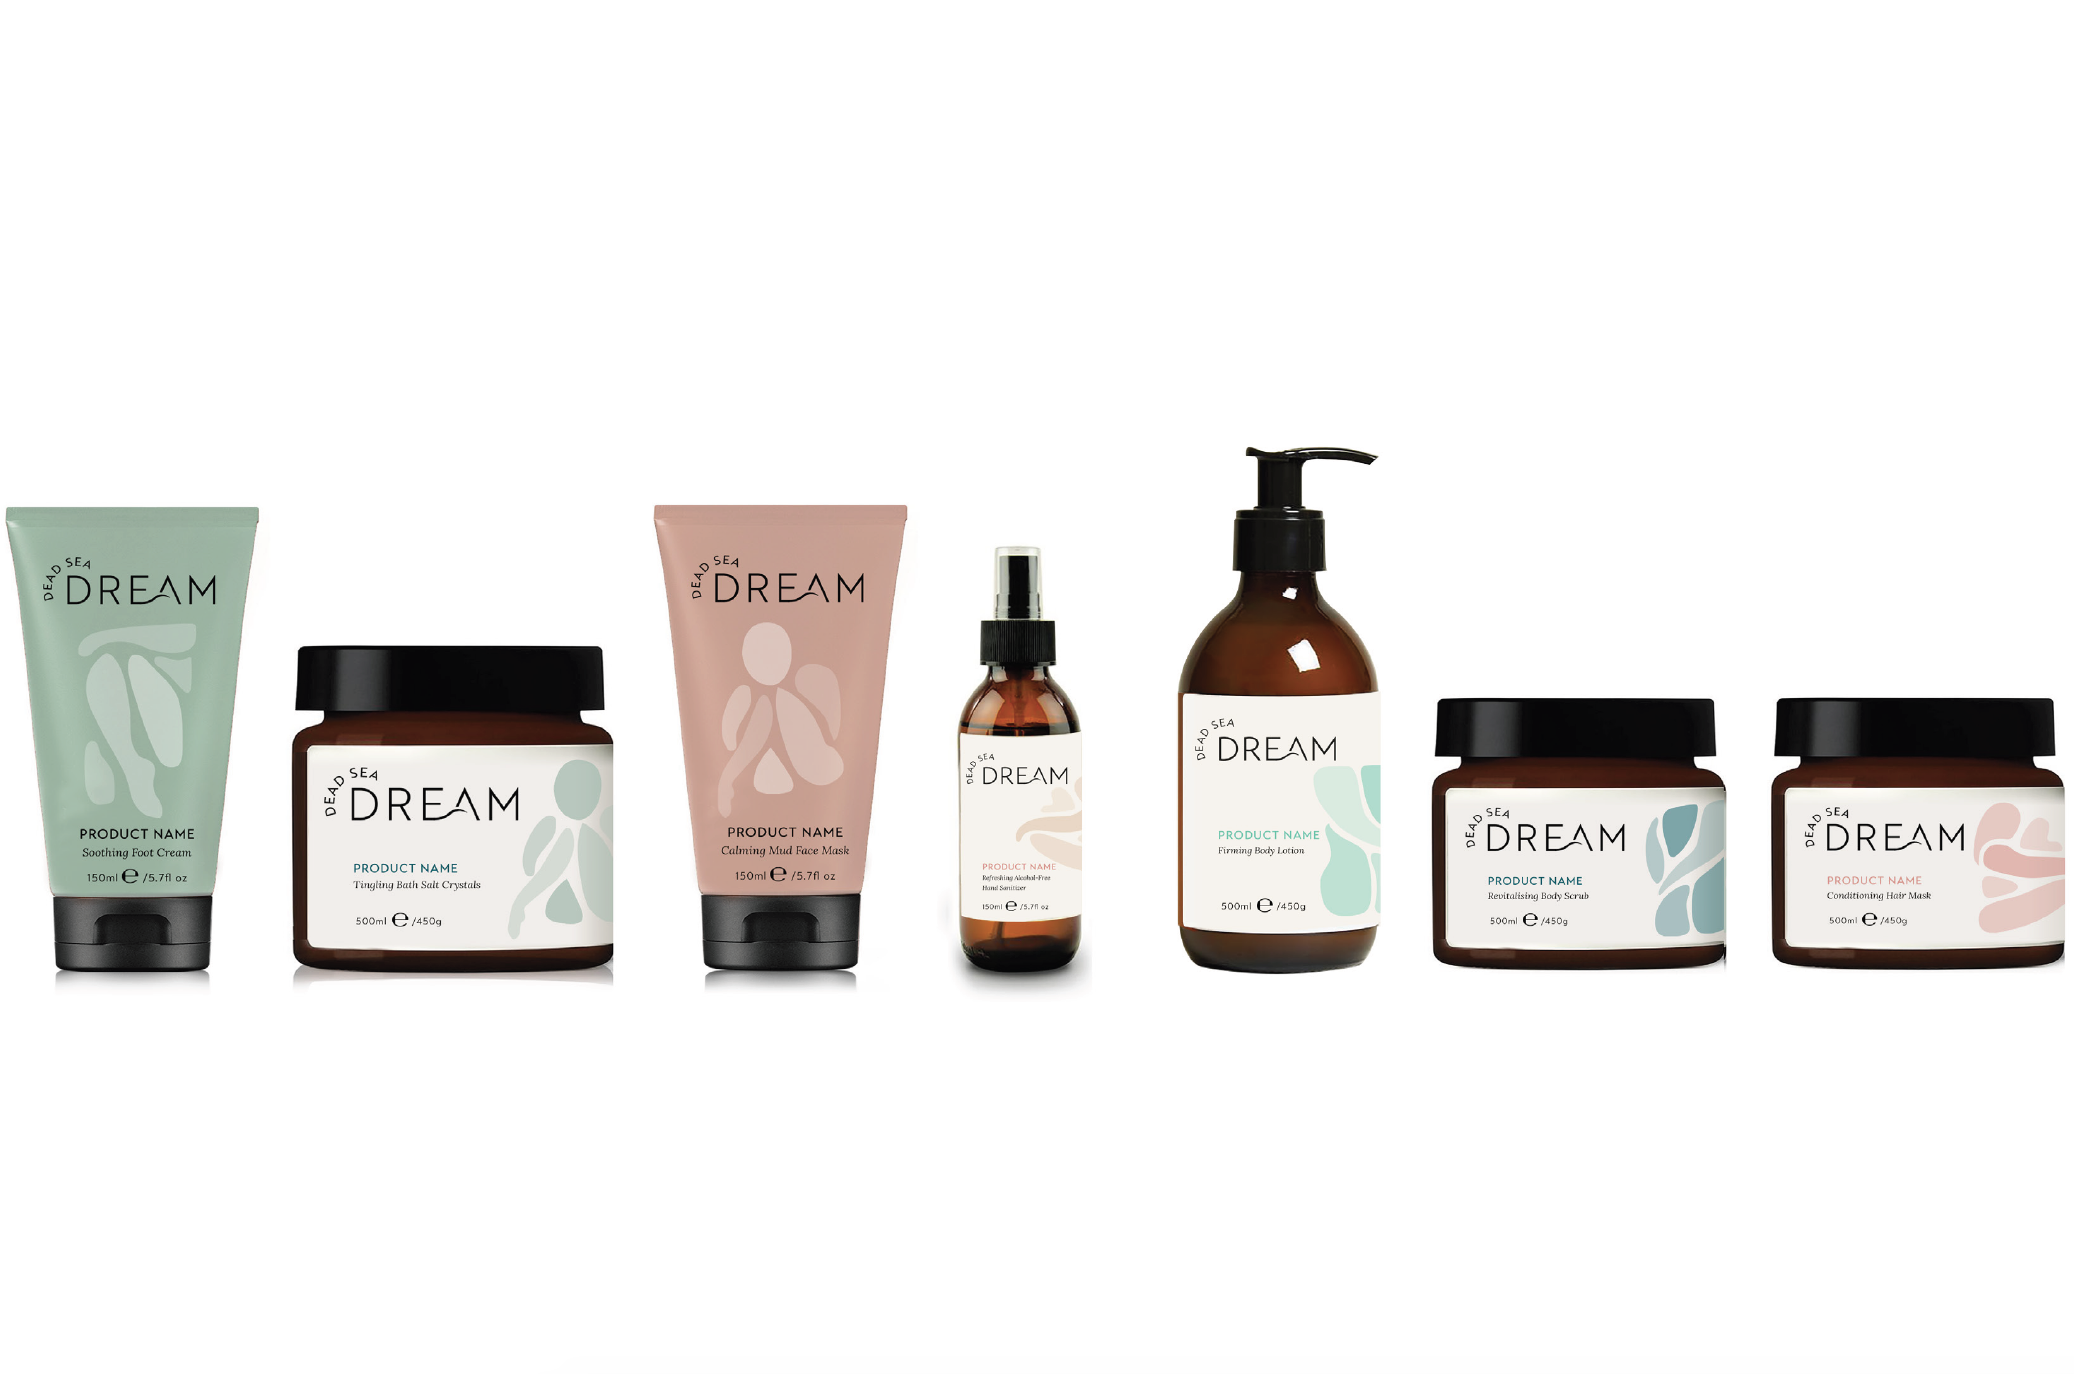 Dead Sea Dream – Creative for a bath and body care brand based on the benefits of Dead Sea minerals